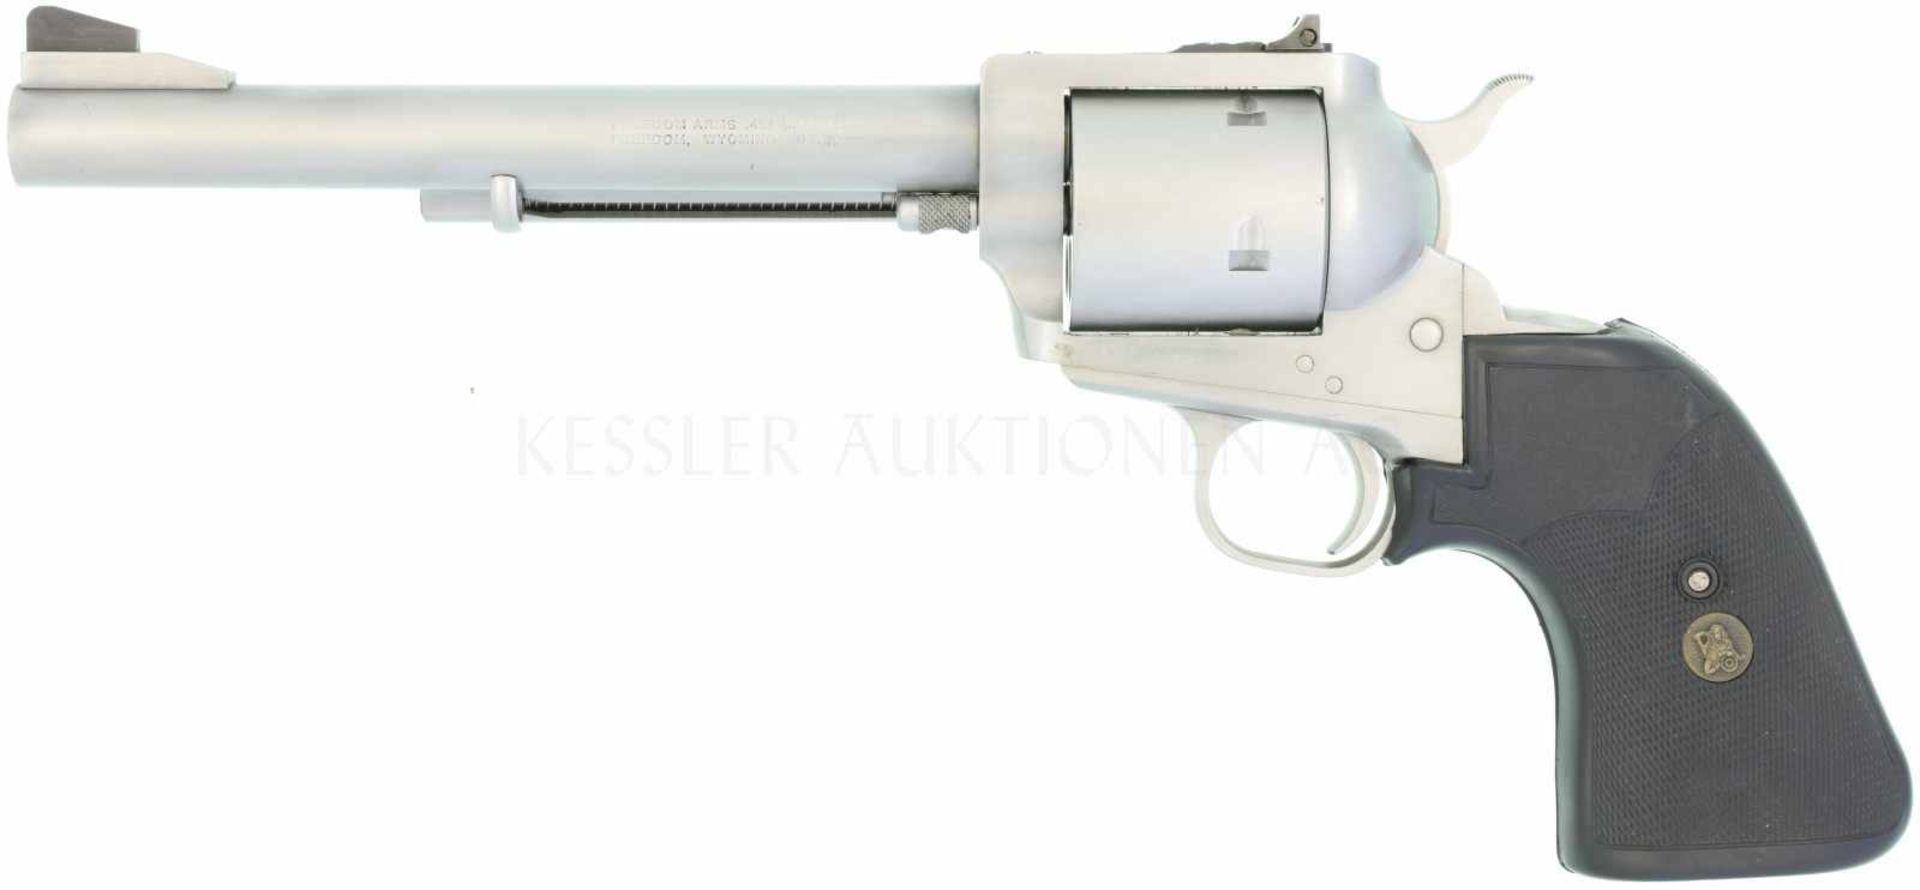 Revolver, Freedom Arms, Casull SAA, Field Grade, Kal. .454Casull 7 1/2" LL, glasperlengestrahle